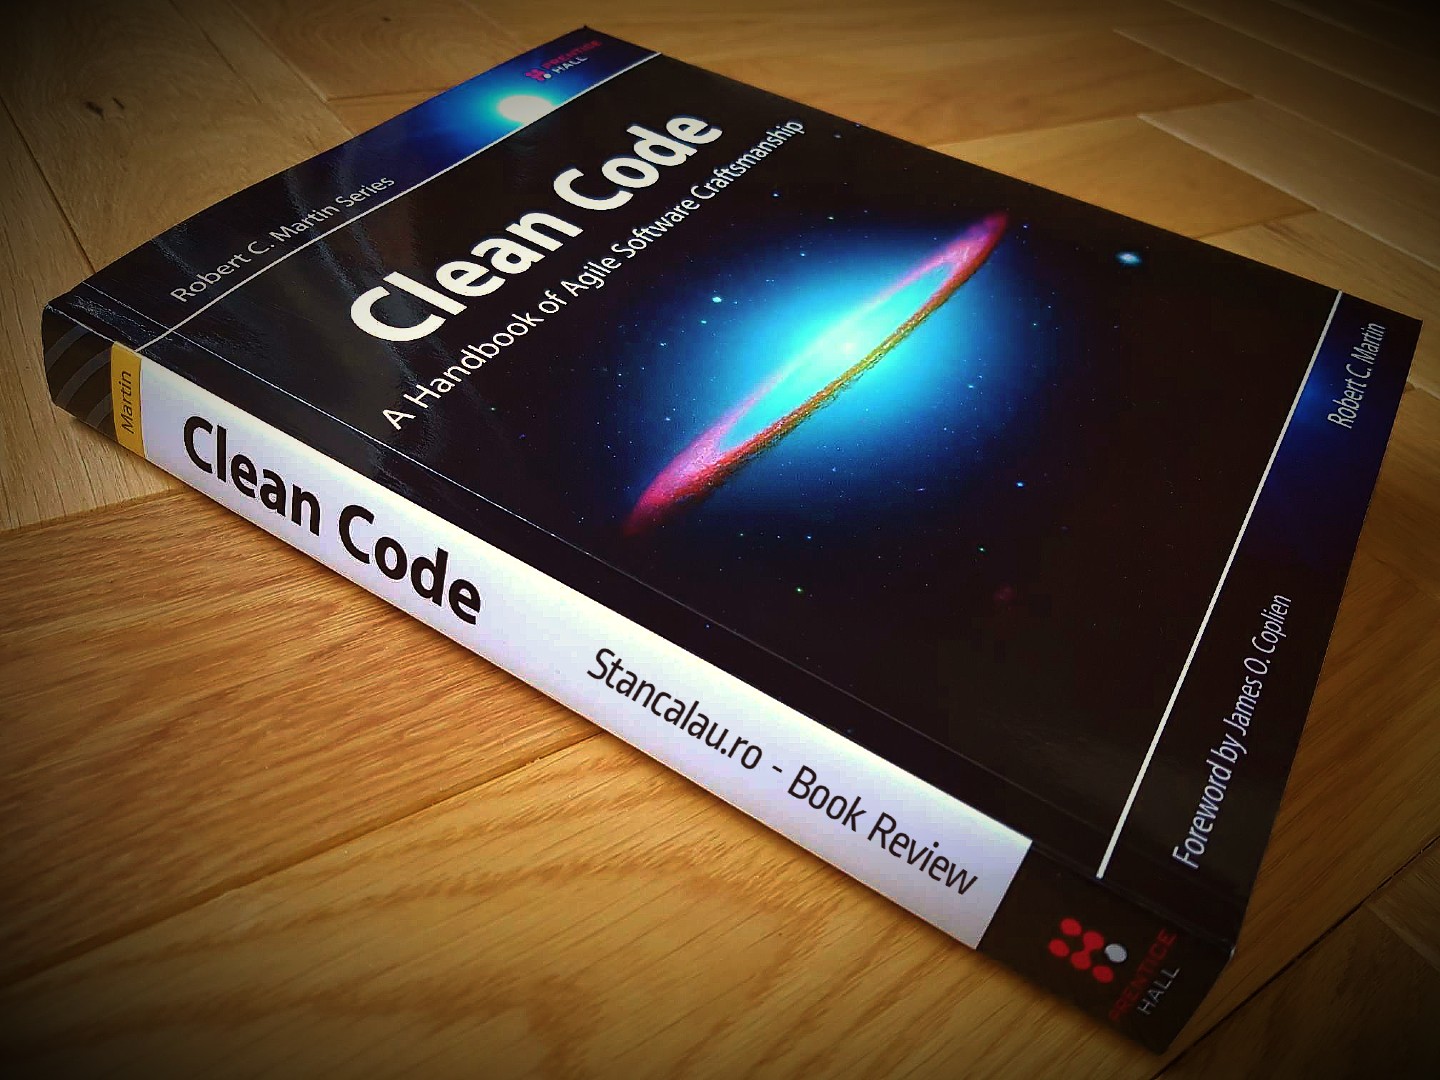 The Clean Code book